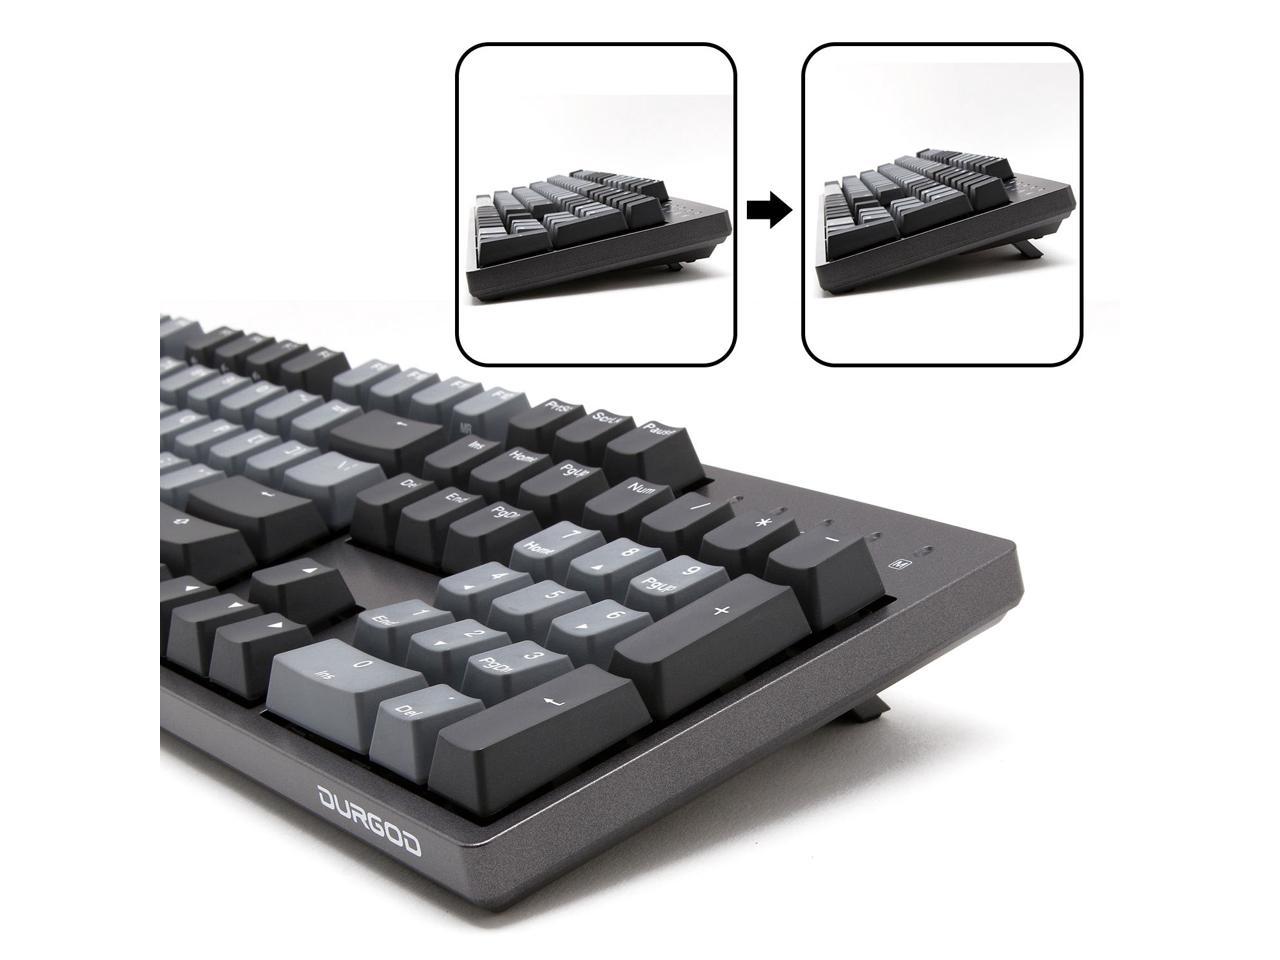 Durgod Taurus K310 Mechanical Gaming Keyboard - 104 Keys - Double Shot PBT  - NKRO - USB Type C (Cherry Silent Red, Grey)